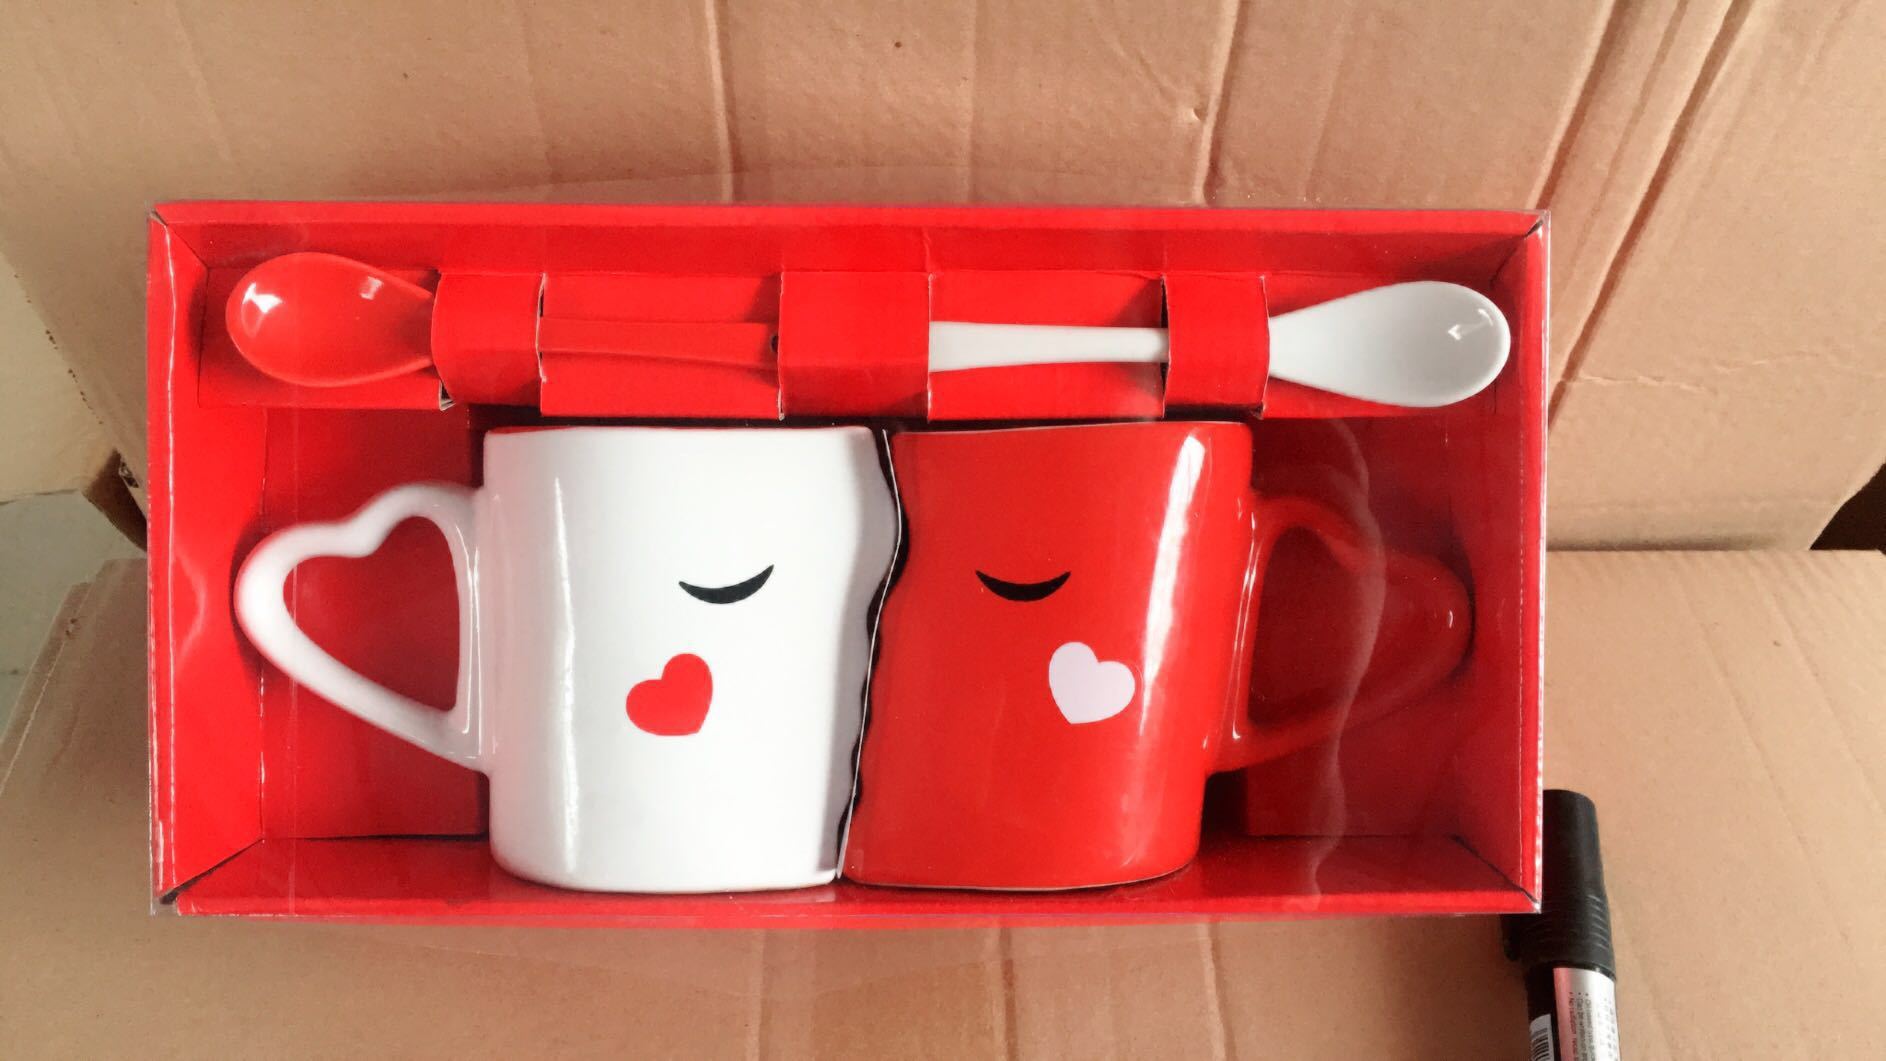 Creative Ceramic Couple's Cups